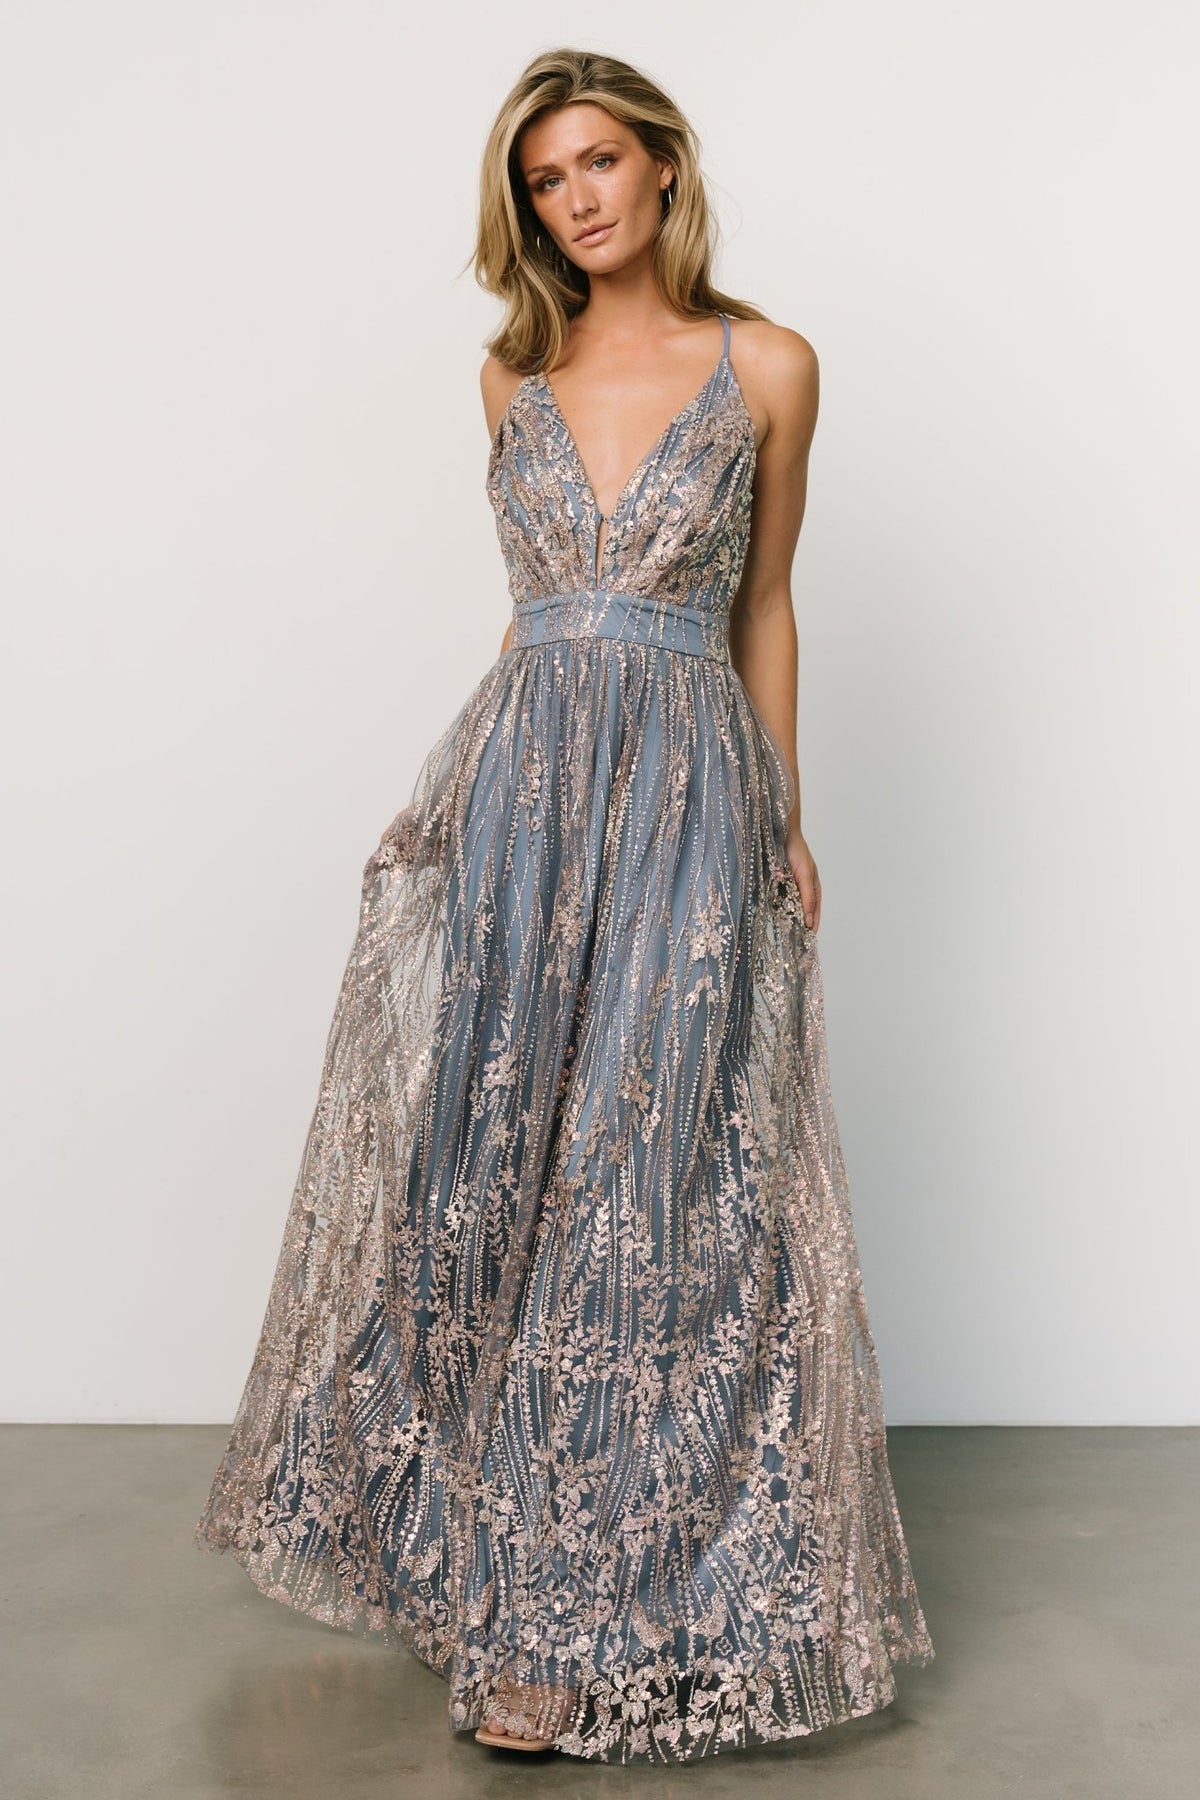 Blondie Nites Womens Metallic Shimmer Evening Dress Gown Juniors BHFO 9427  | eBay